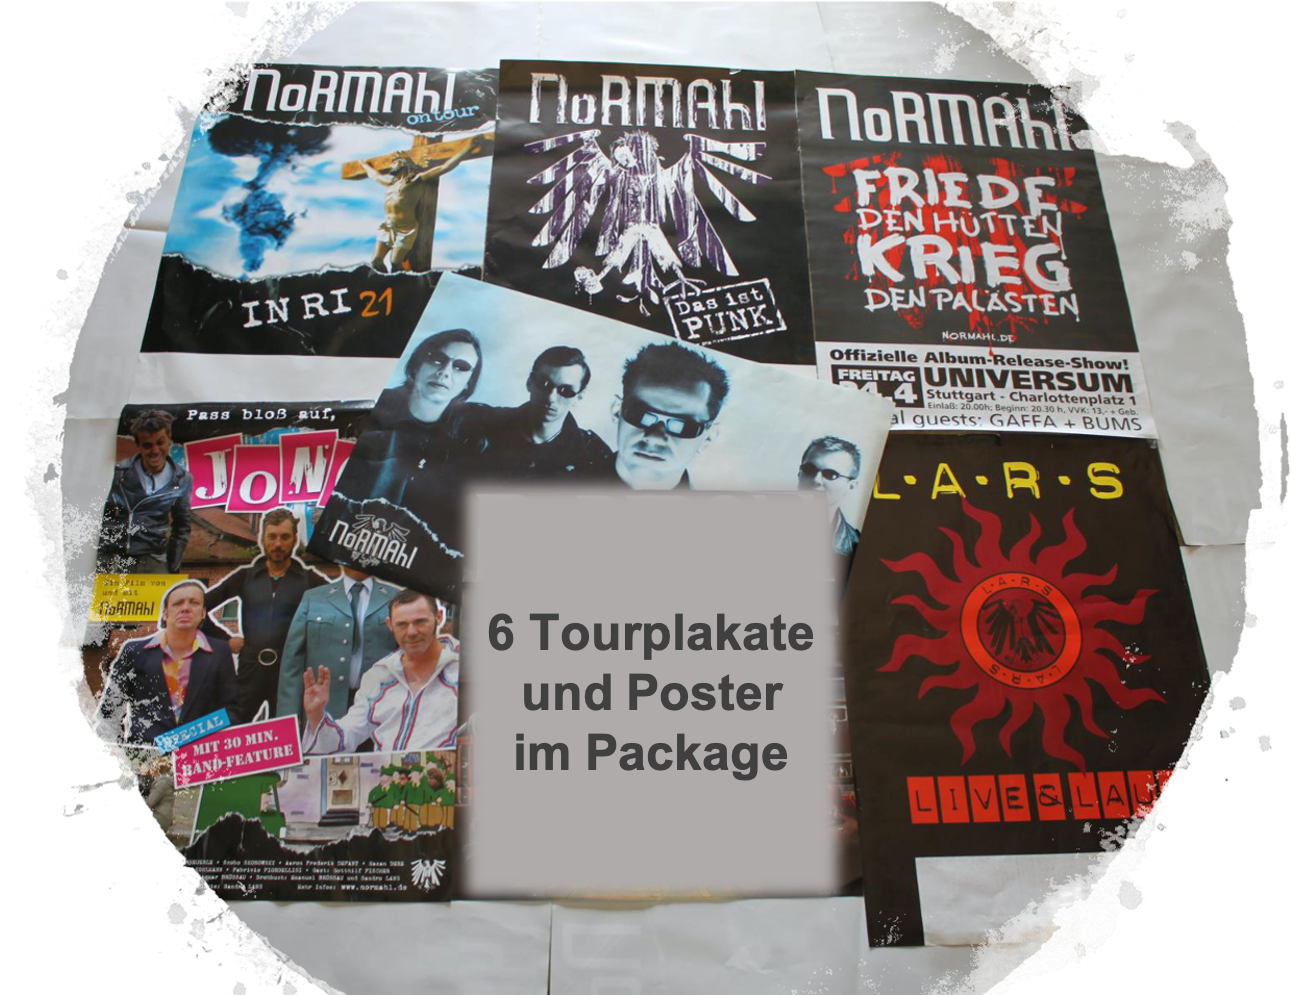 NoRMAhl: Tourplakat und Poster Package